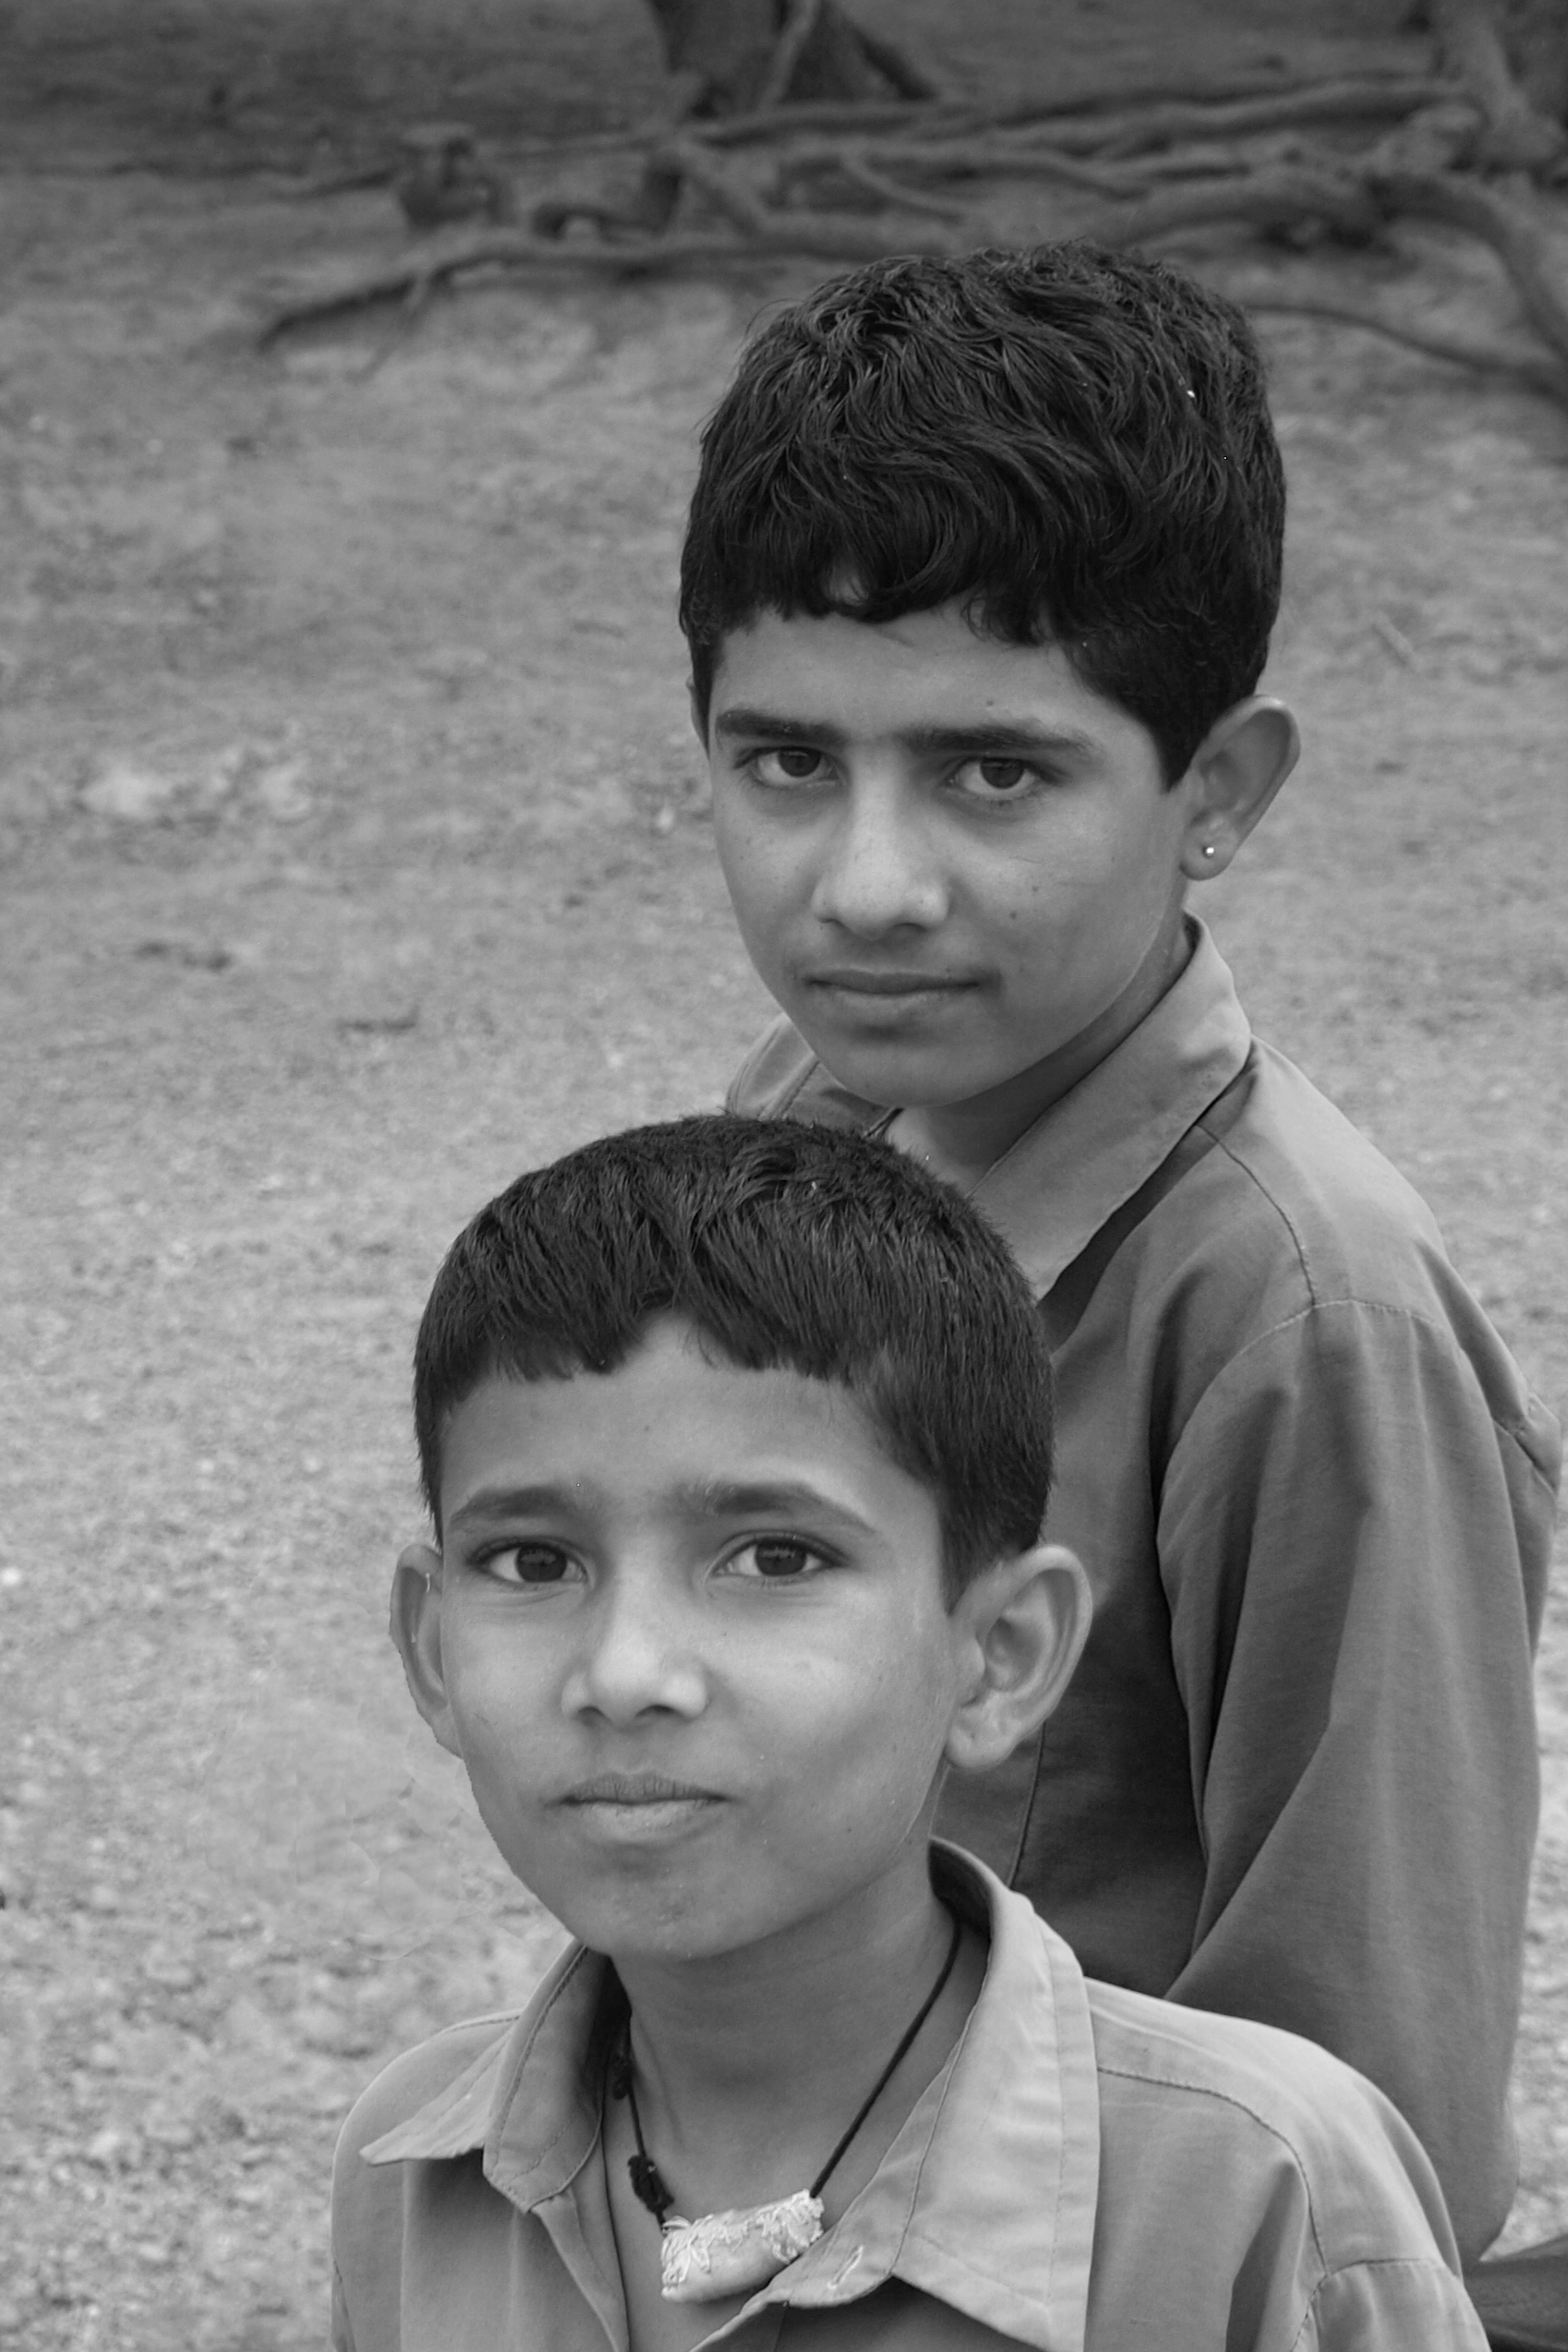 Indiai falusi gyerekek